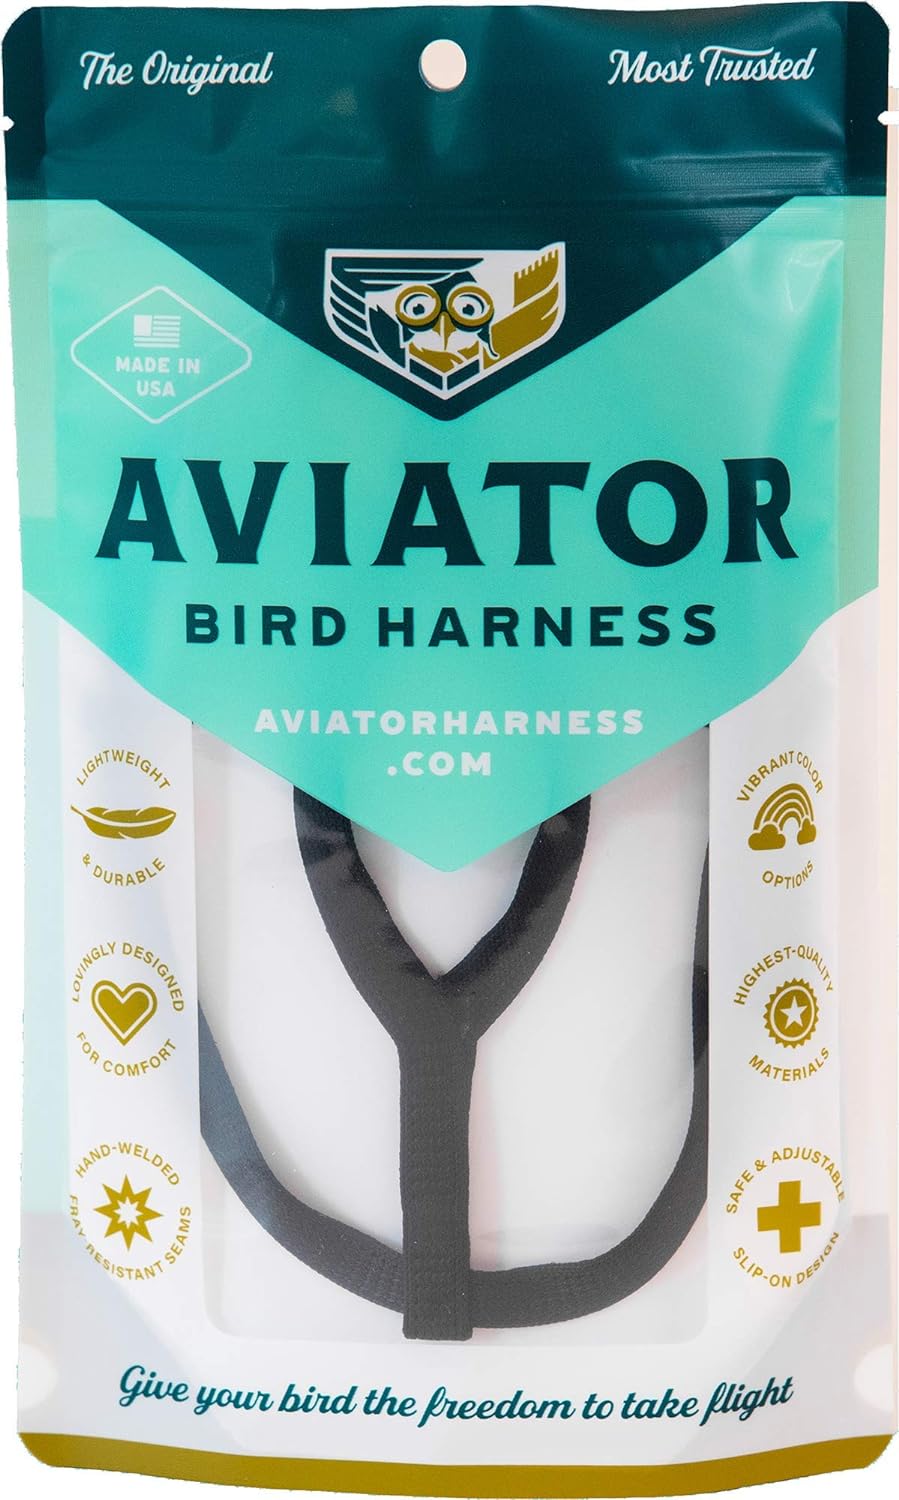 The Aviator Pet Bird Harness and Leash: Petite Black?95-0101-BK